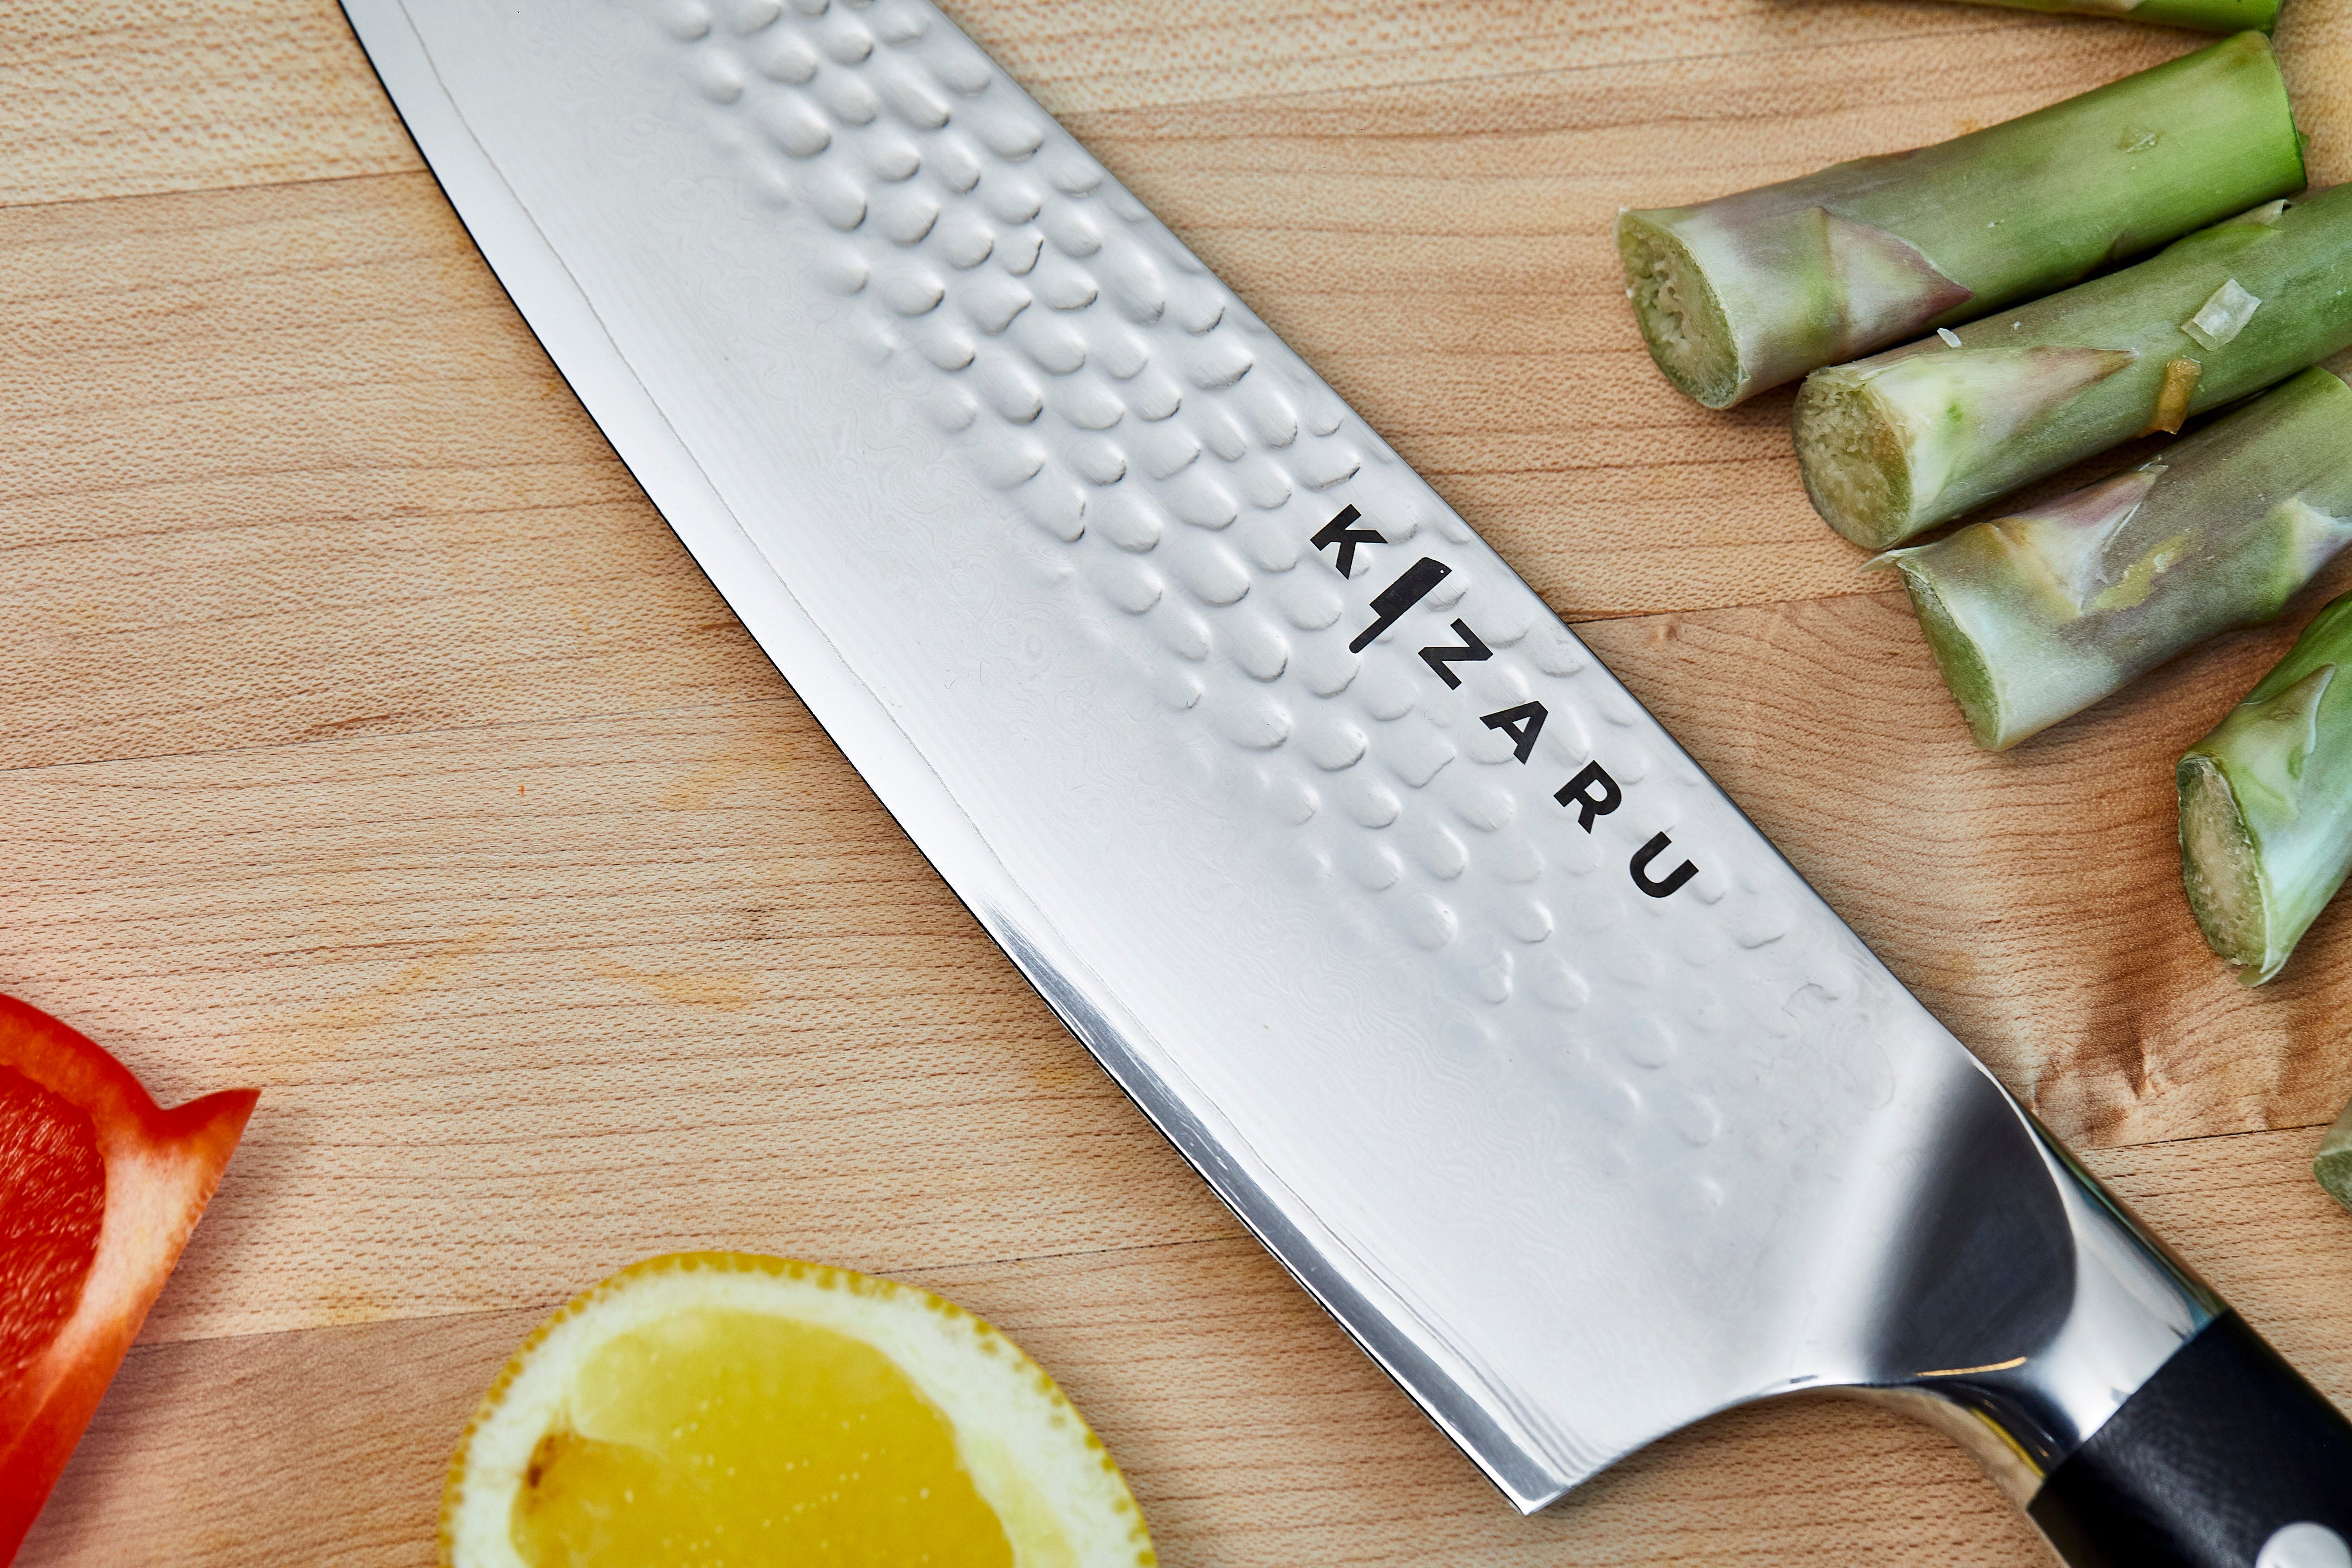 Kizaru Steak Knives, Japanese Serrated Knife Set With Luxury Damascus  Pattern